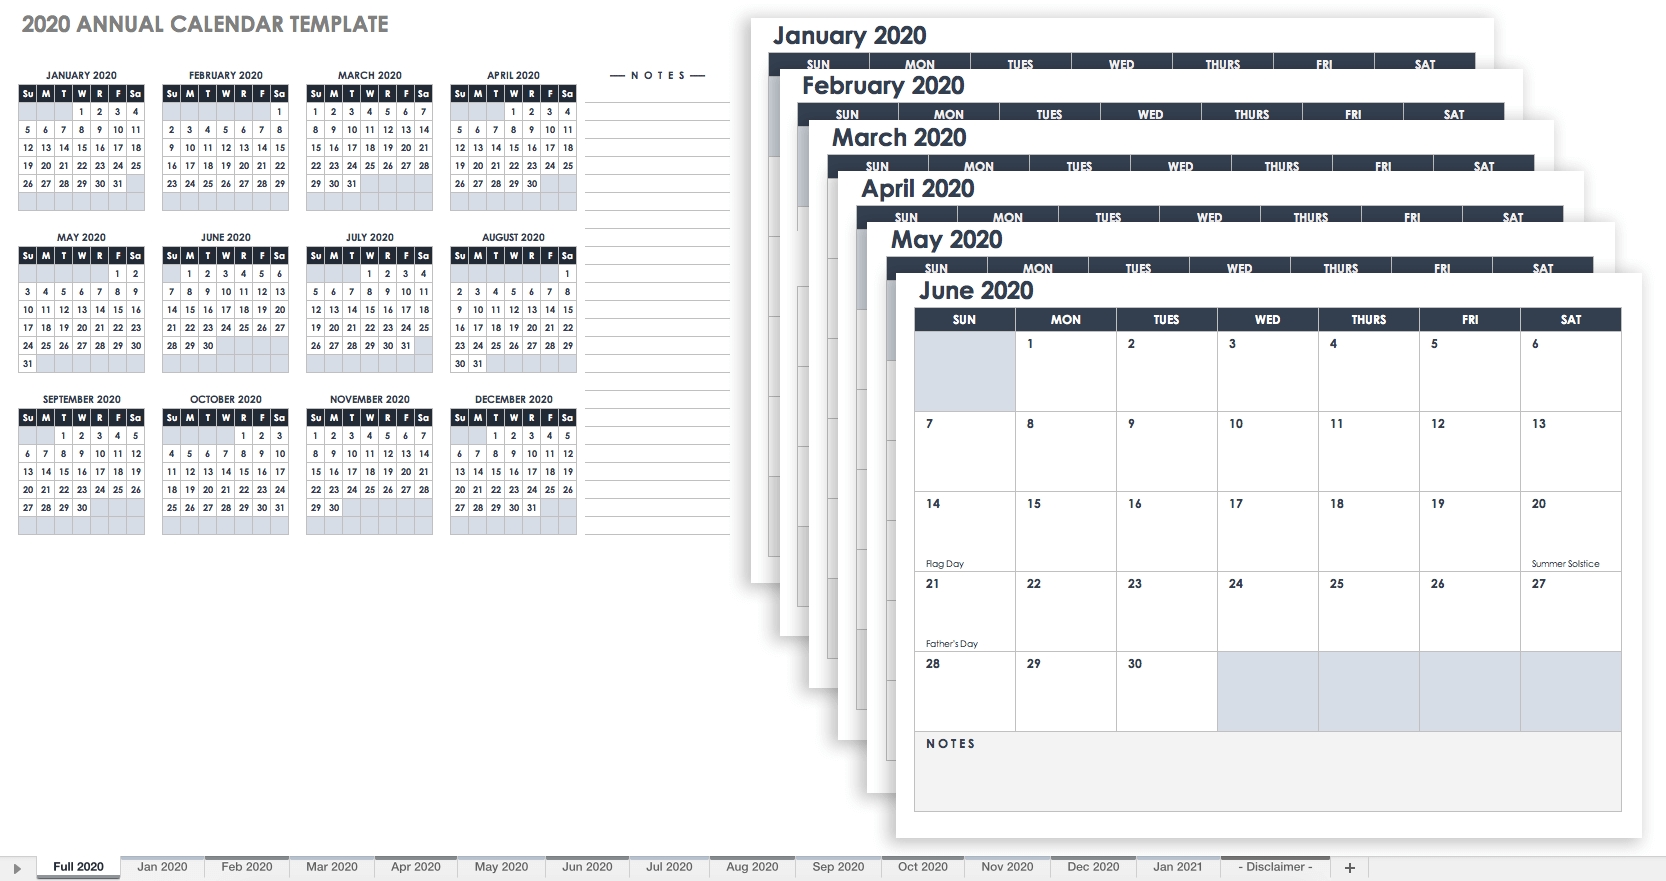 Free Blank Calendar Templates - Smartsheet-Monthly Wellness Calendar 2020 Pdf